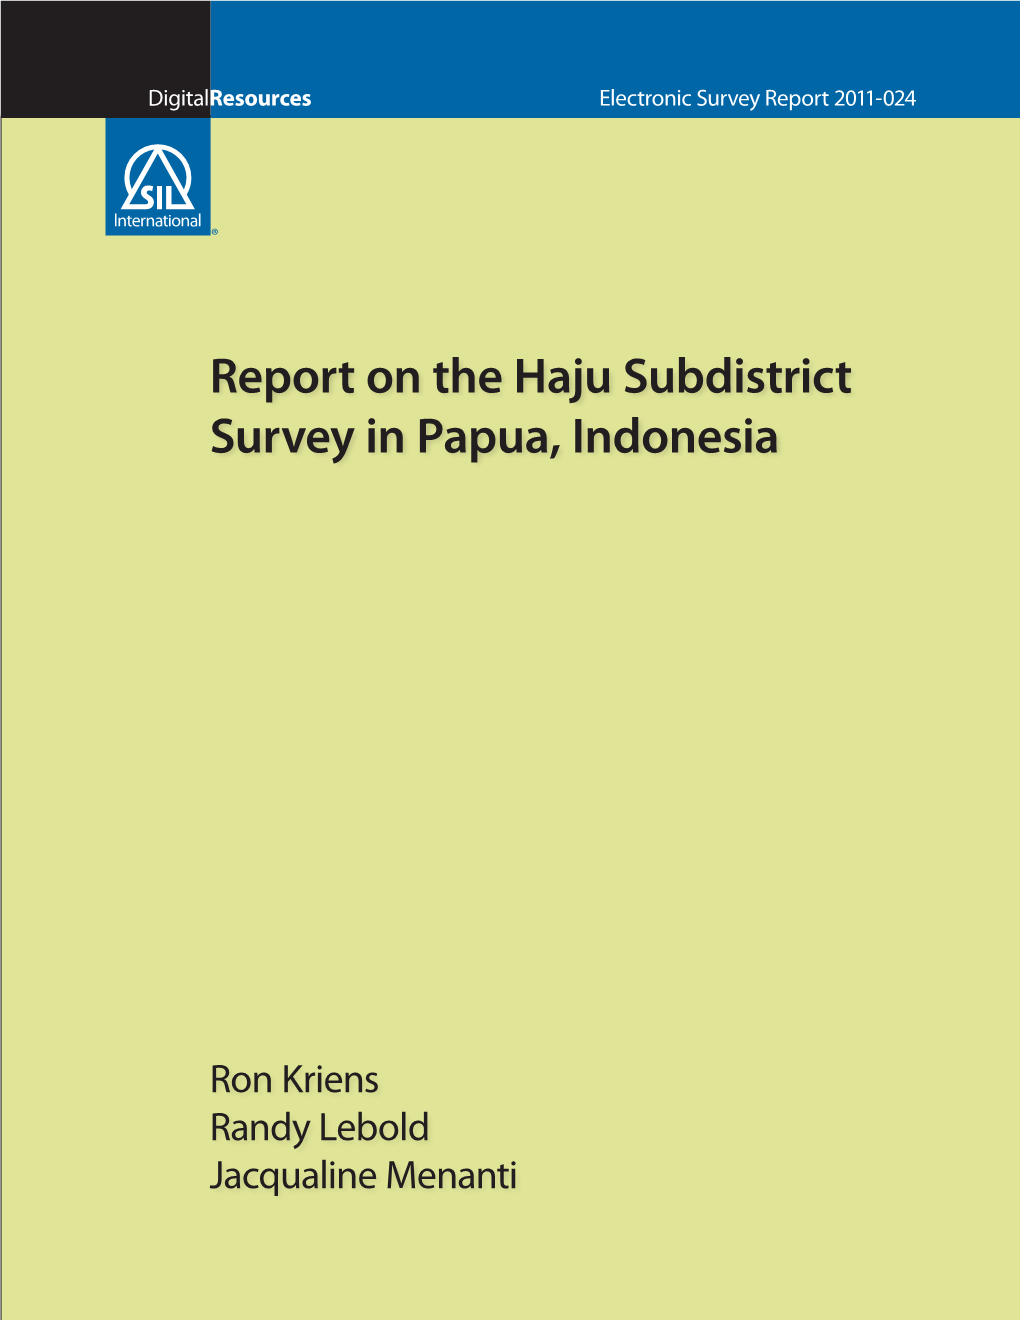 Report on the Haju Subdistrict Survey in Papua, Indonesia